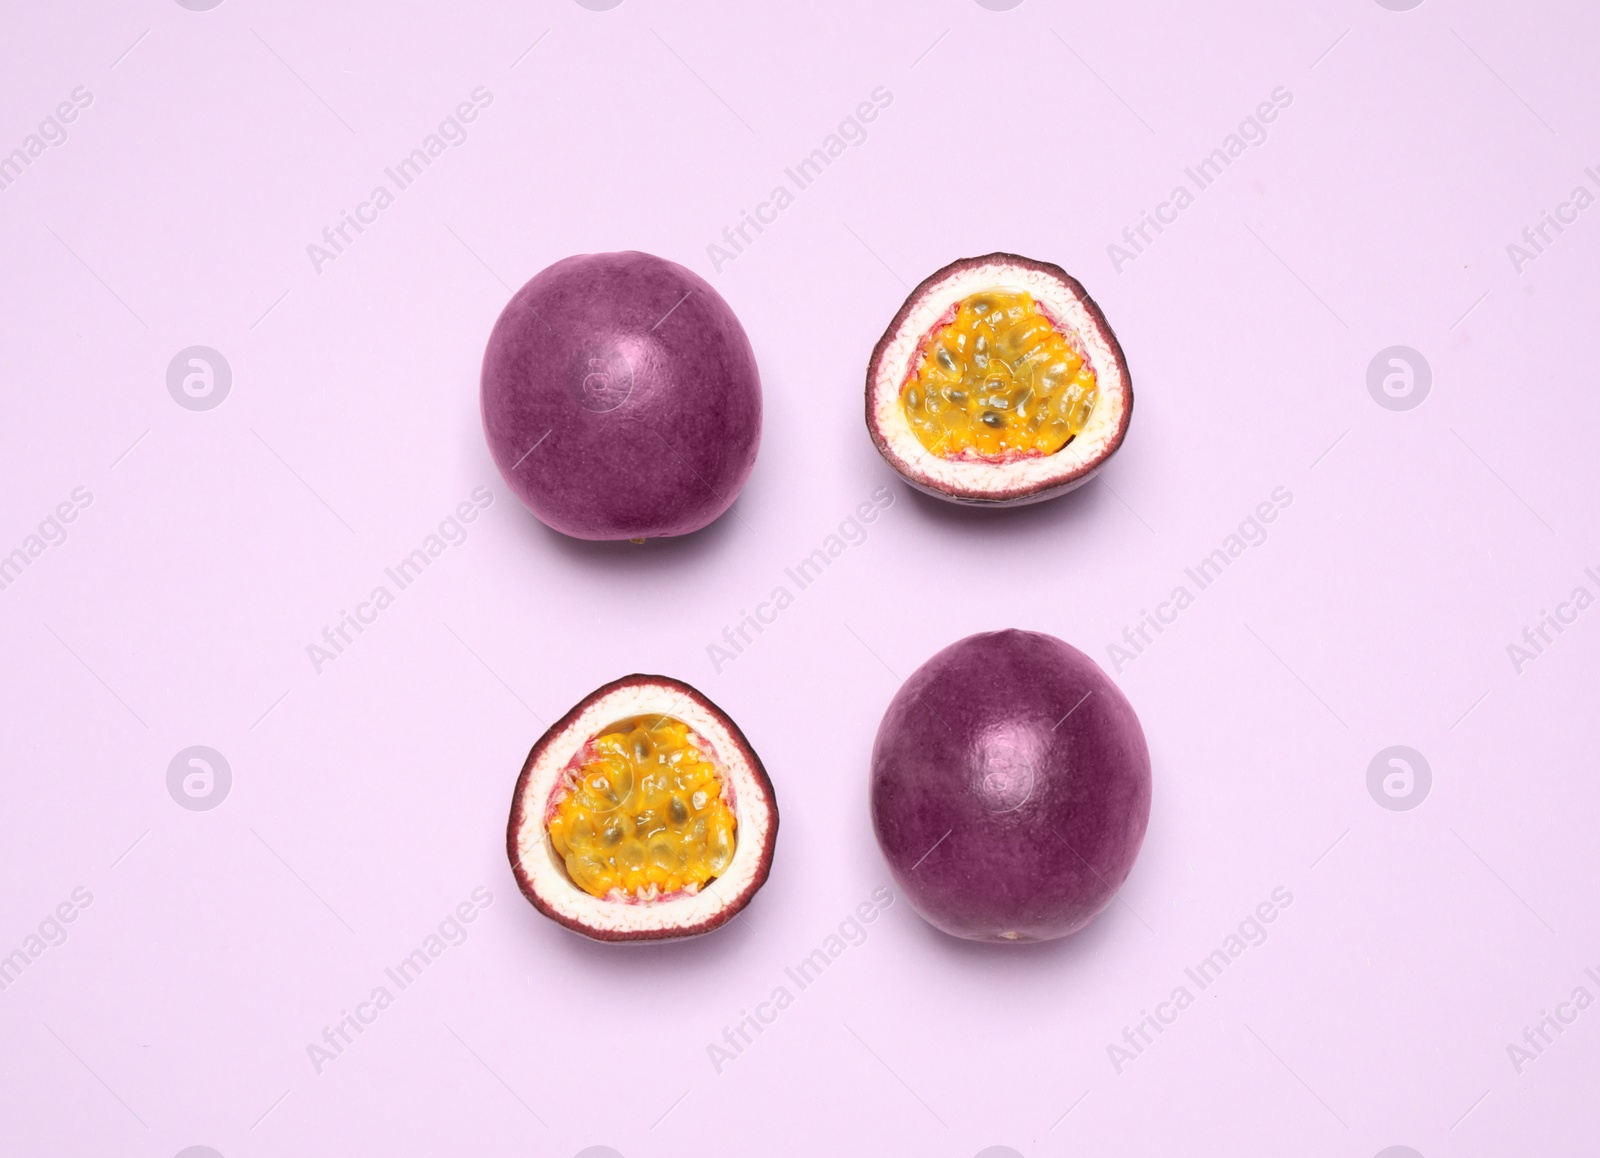 Photo of Fresh ripe passion fruits (maracuyas) on light violet background, flat lay